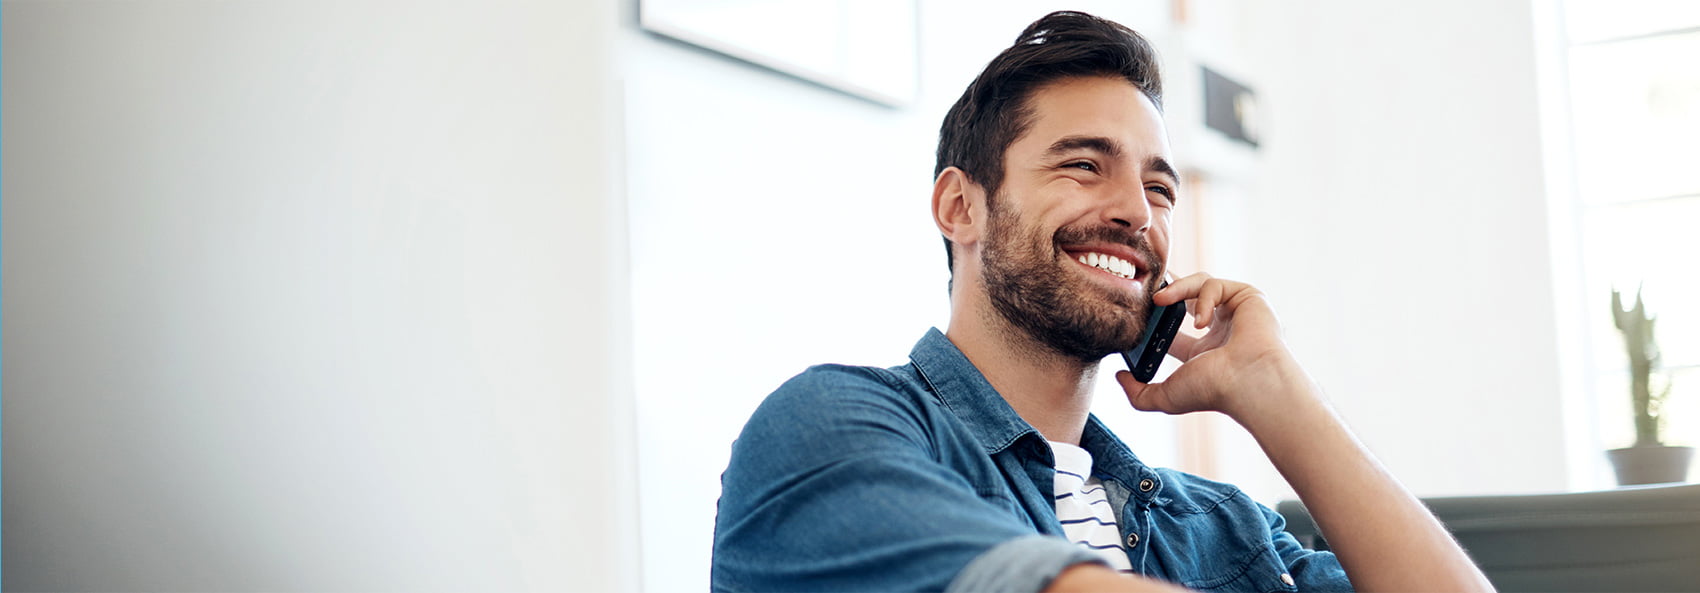 man with beard talking on phone smiling